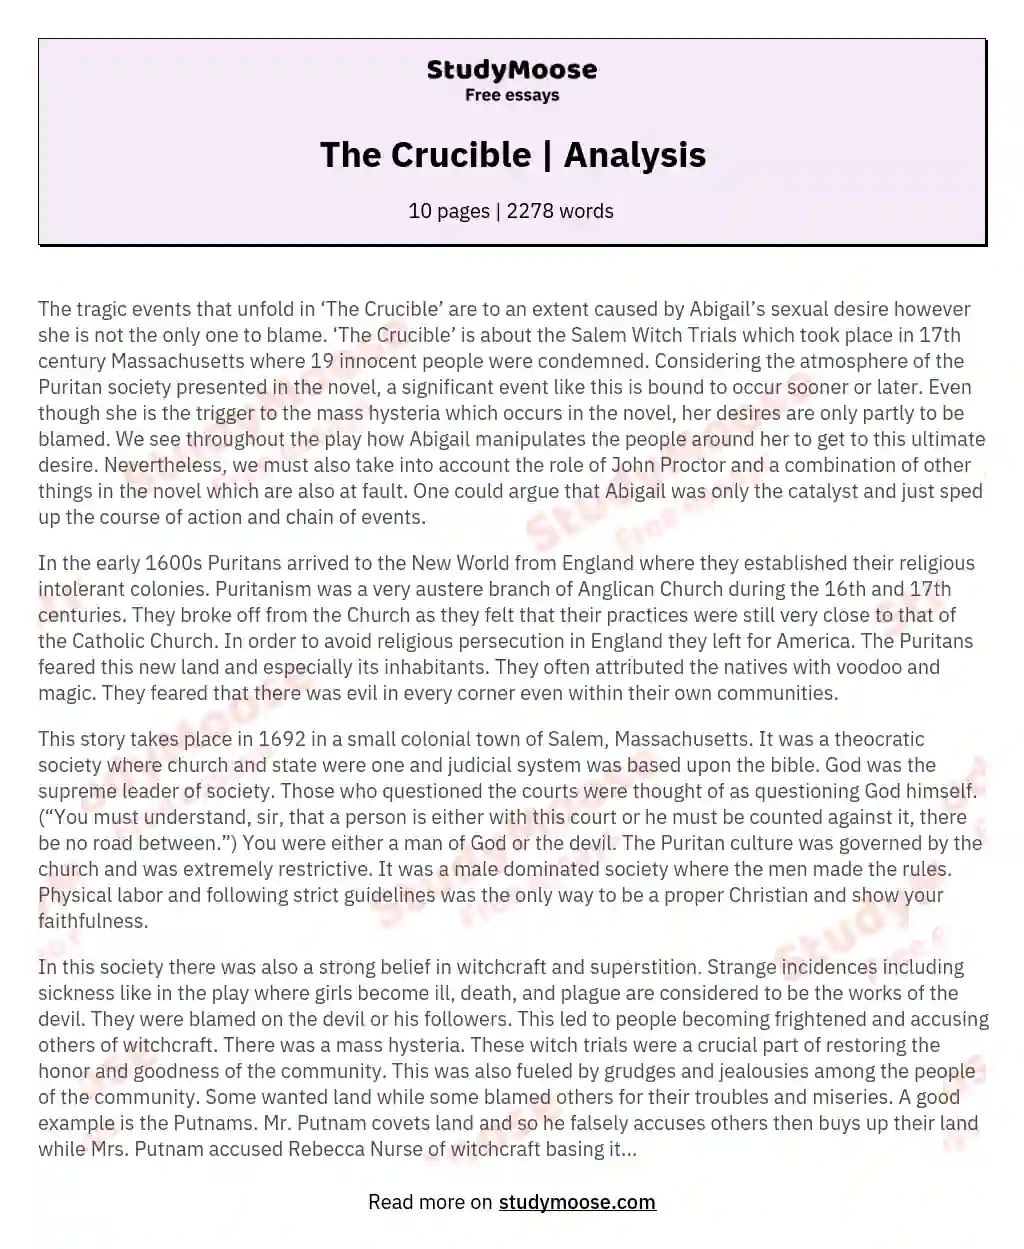 The Crucible | Analysis essay